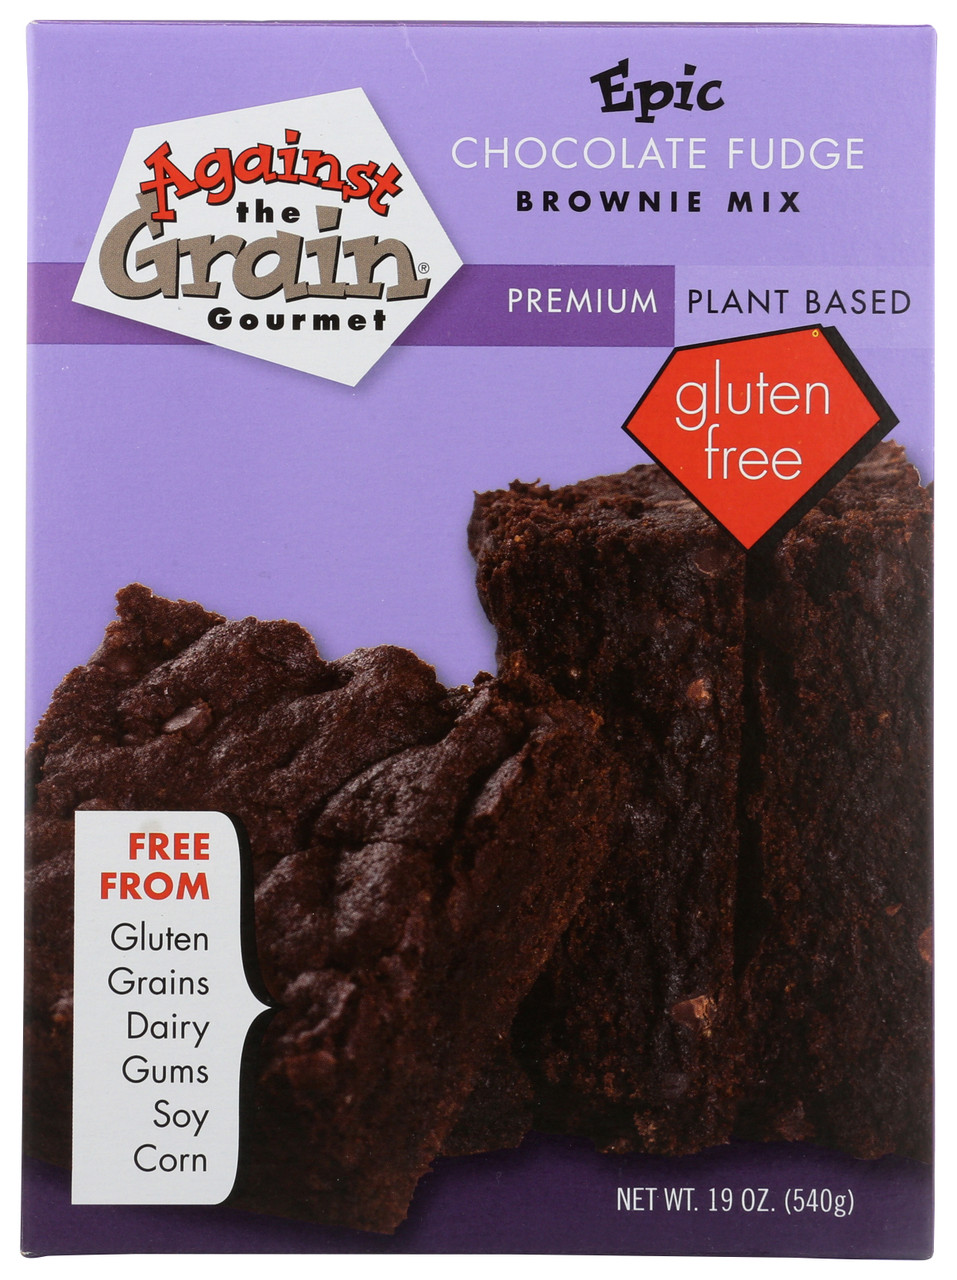 Brownie Mix Double Chocolate Fudge Gluten Free 19oz